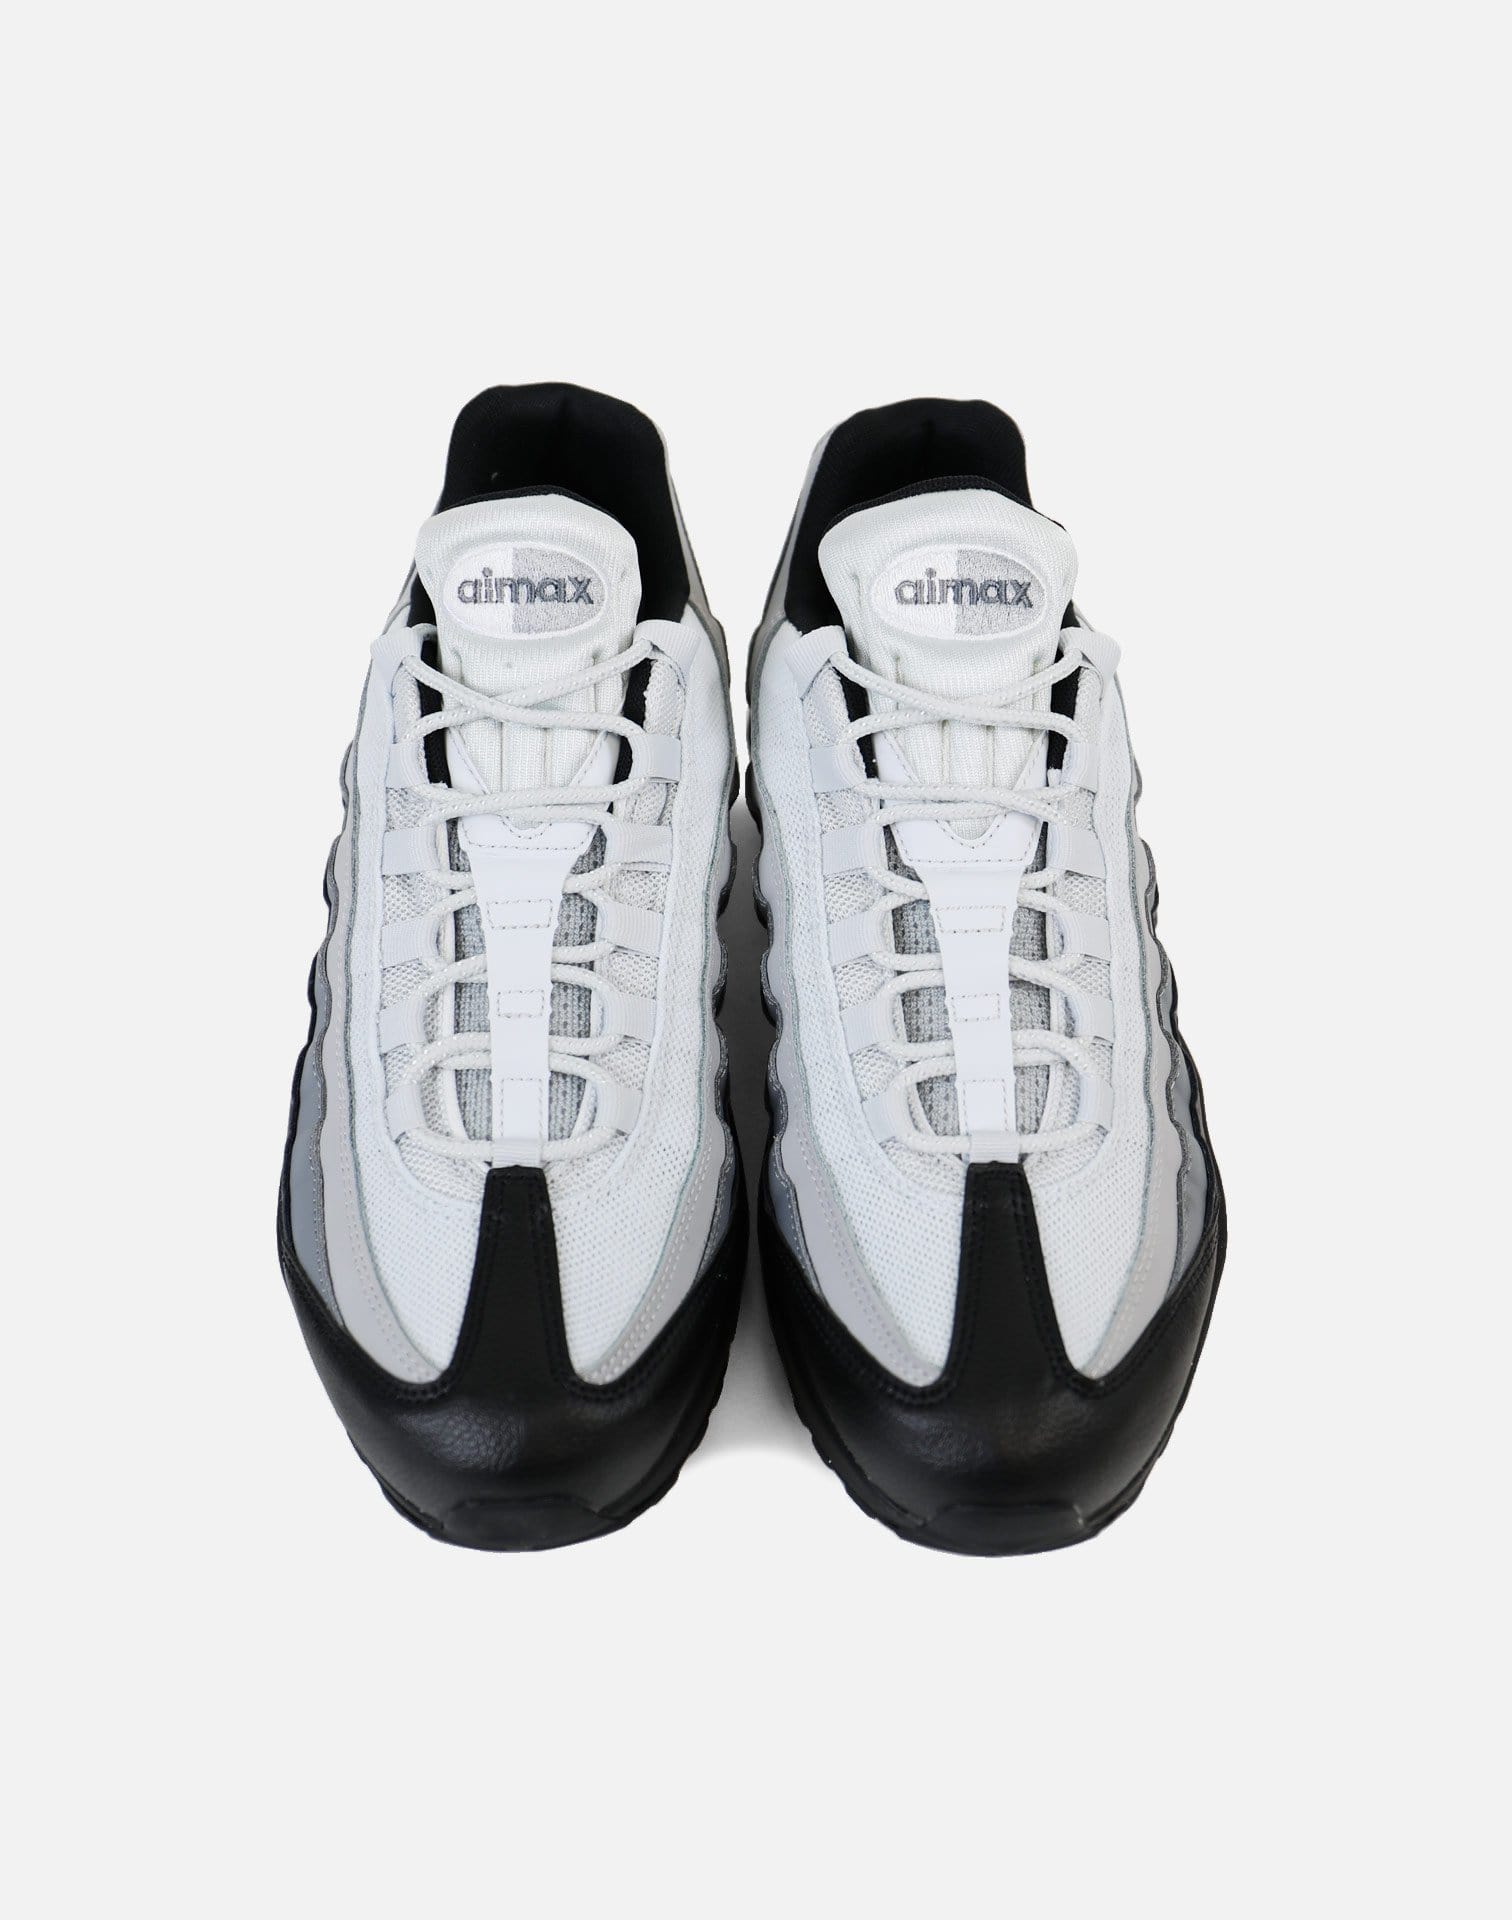 Nike Air Max 95 Essential (Black/Dark Grey-Cool Grey-White)